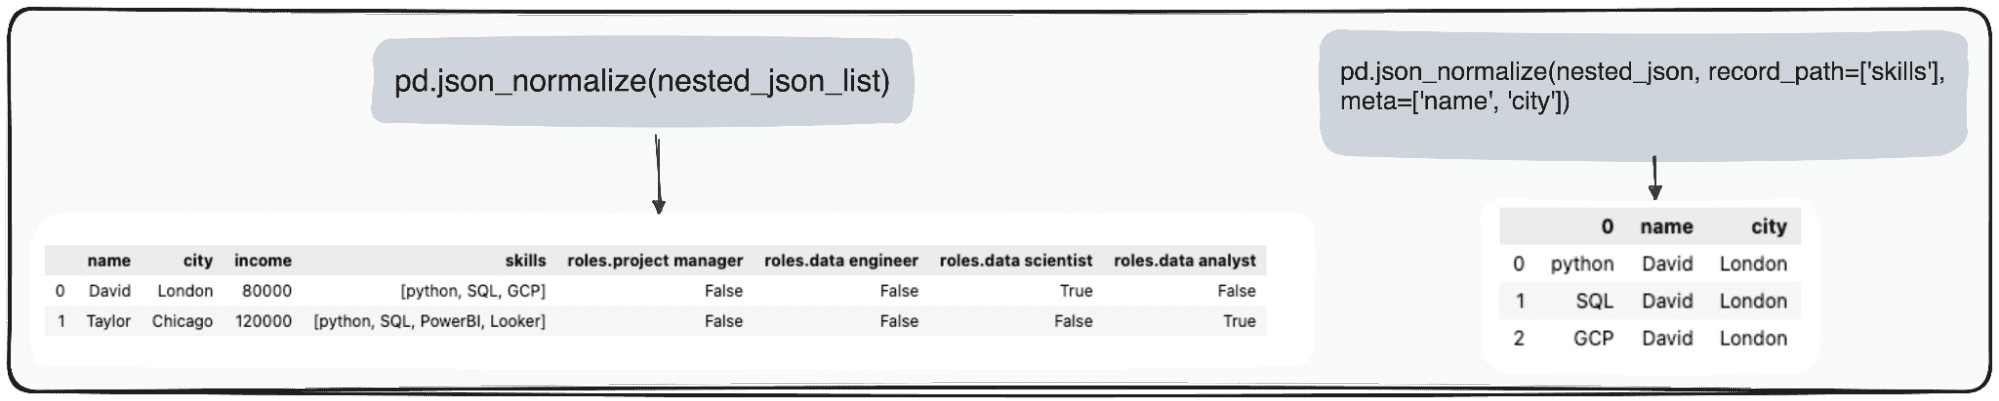 JSONs کو پانڈاس ڈیٹا فریمز میں تبدیل کرنا: انہیں صحیح طریقے سے پارس کرنا